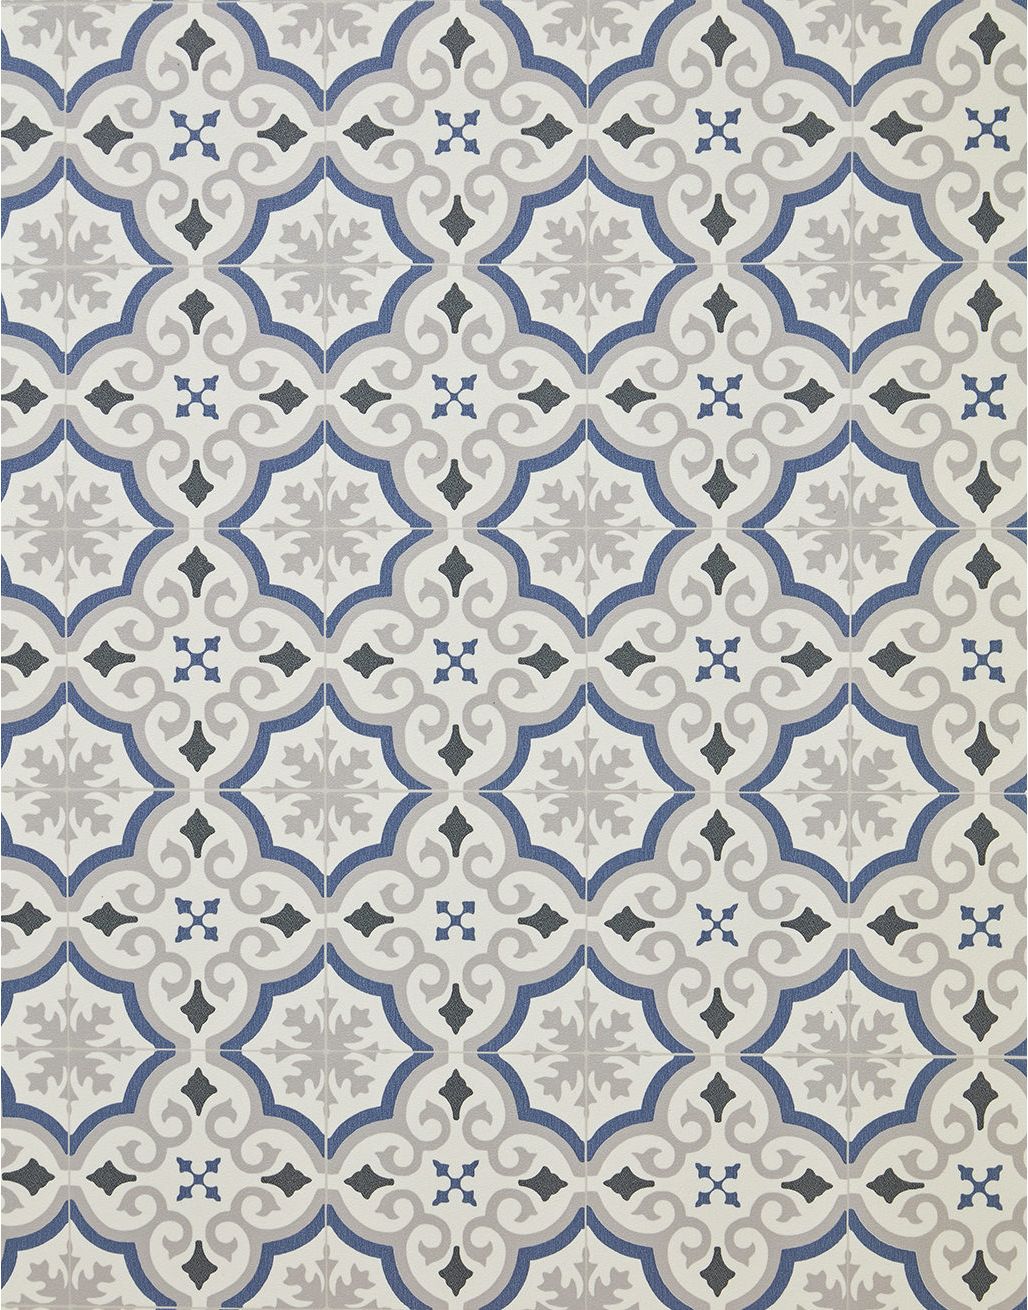 Patterned Tiles - Blue Mosaic 3